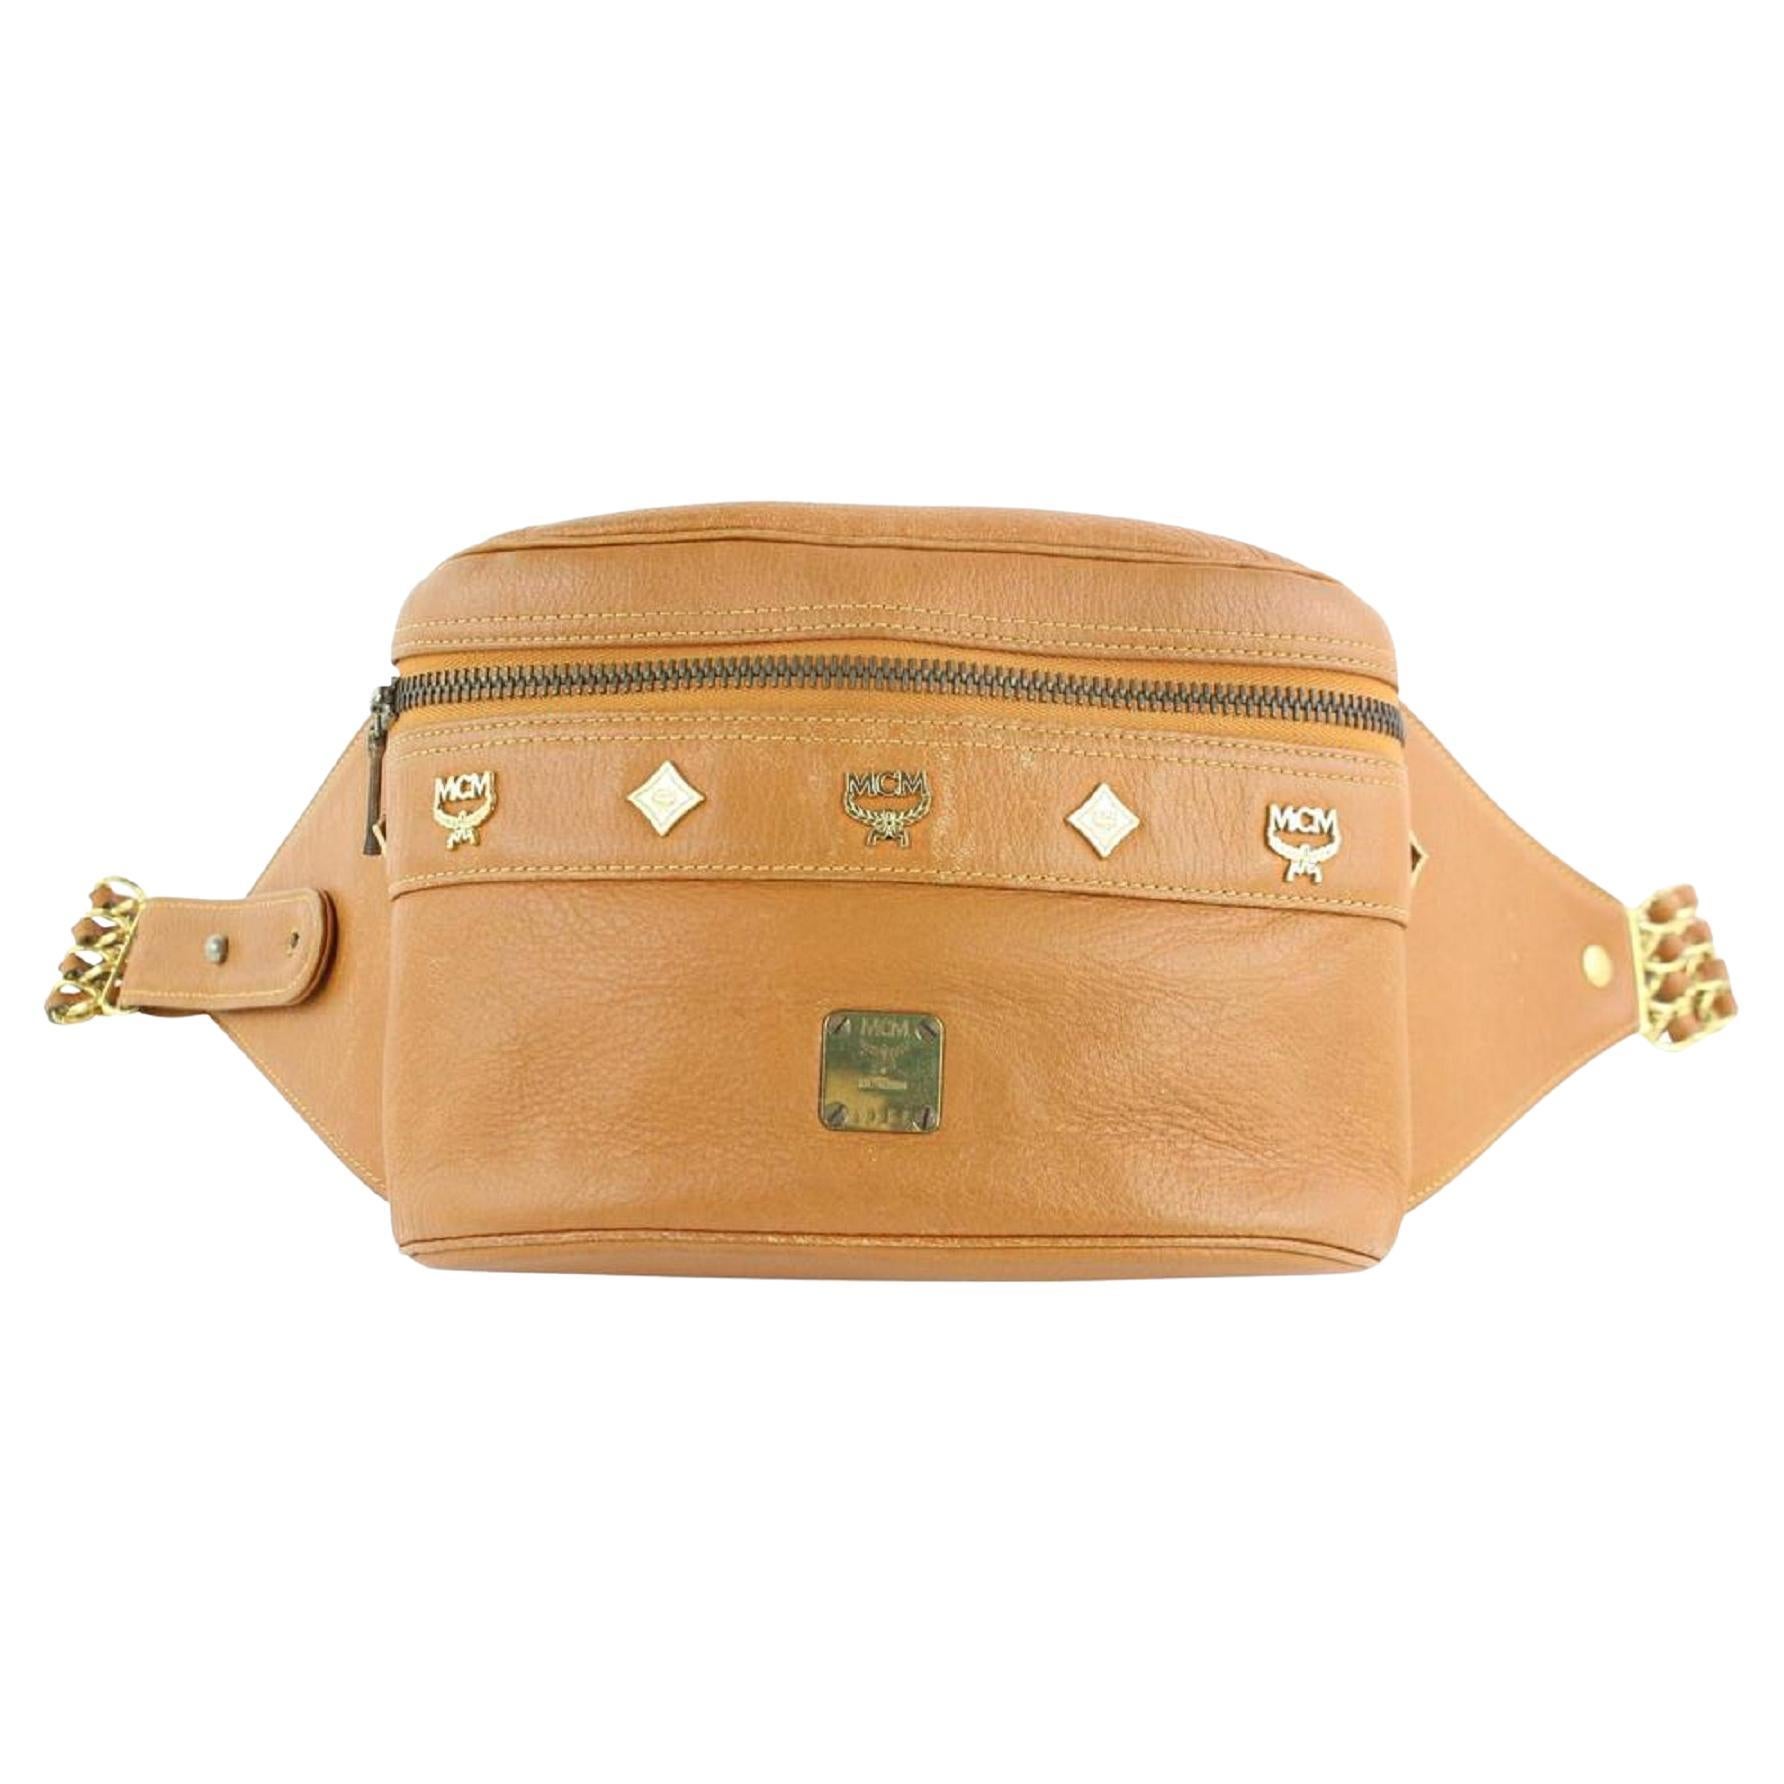 MCM Waist Cognac Studded Chain Fanny Pack Belt Pouch 10mcz1812 Brown Leather